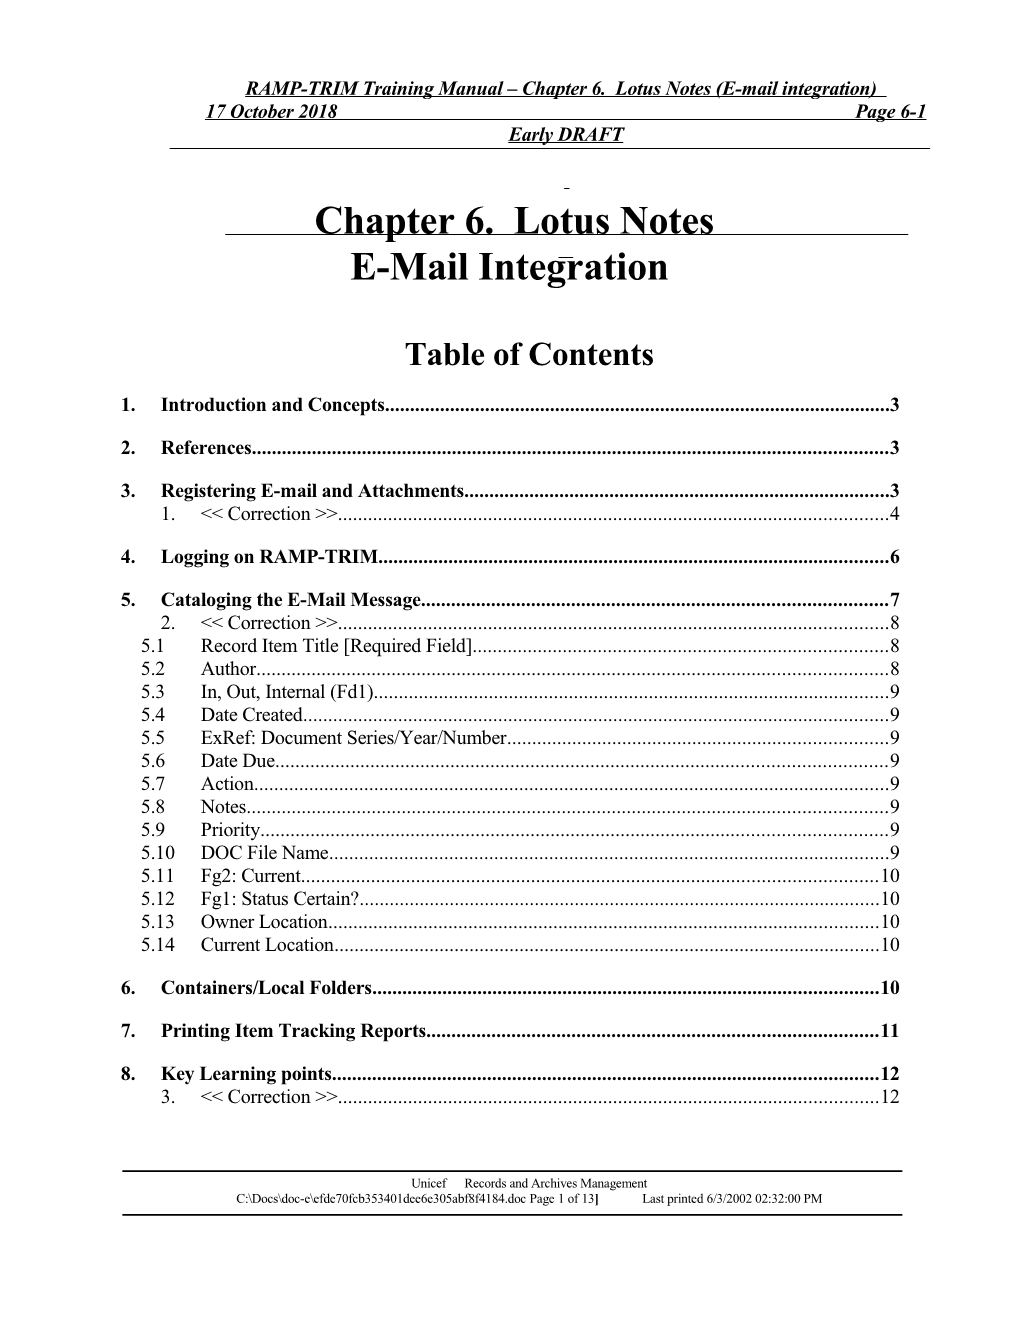 RAMP-TRIM Training Manual Chapter 6. Lotus Notes (E-Mail Integration)